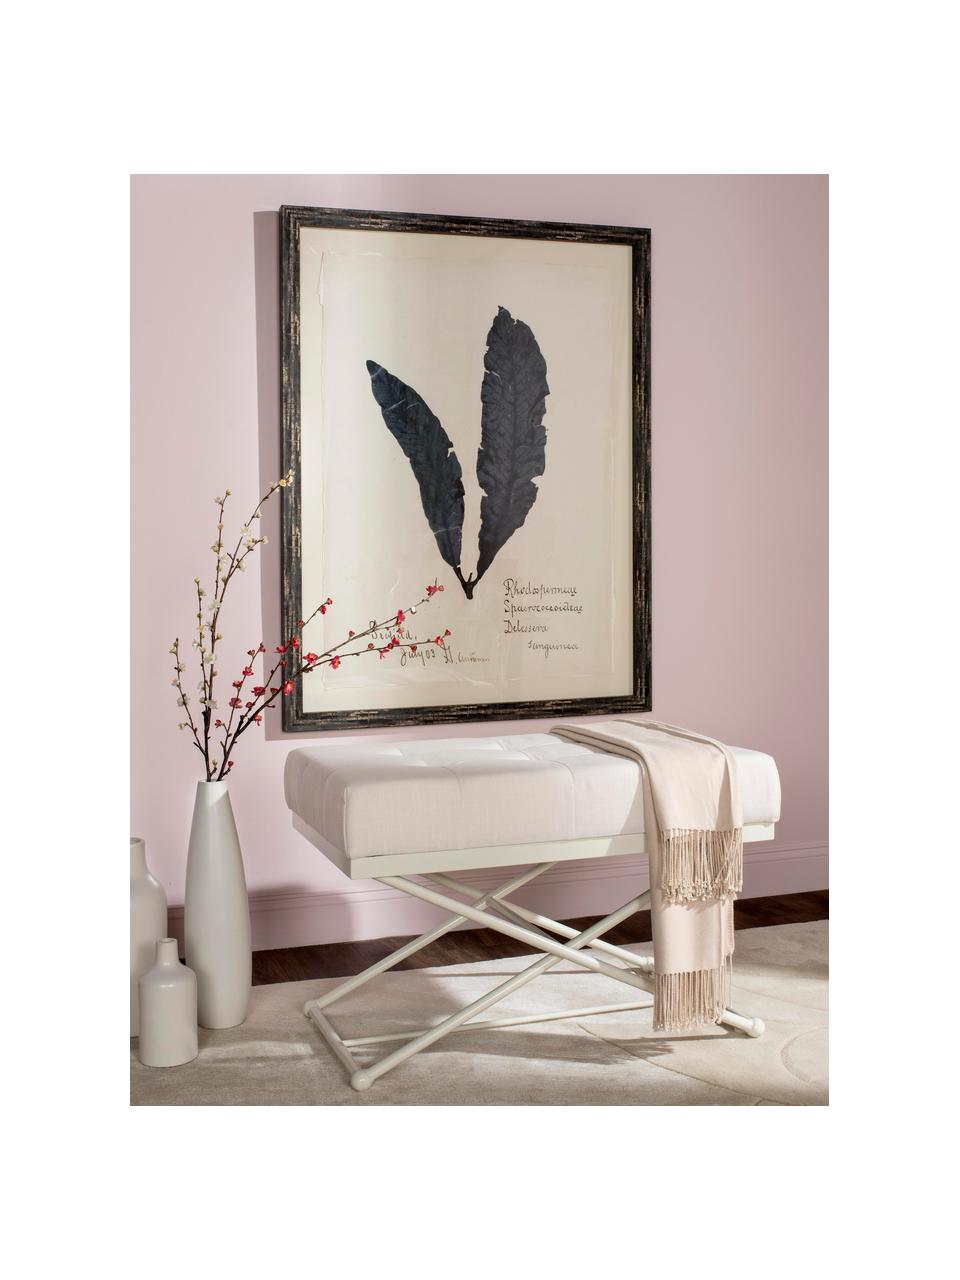 Sitzbank Chloe in Weiß, gepolstert, Bezug: Leinen, Füße: Metall, lackiert, Ecru, Creme, 83 x 56 cm